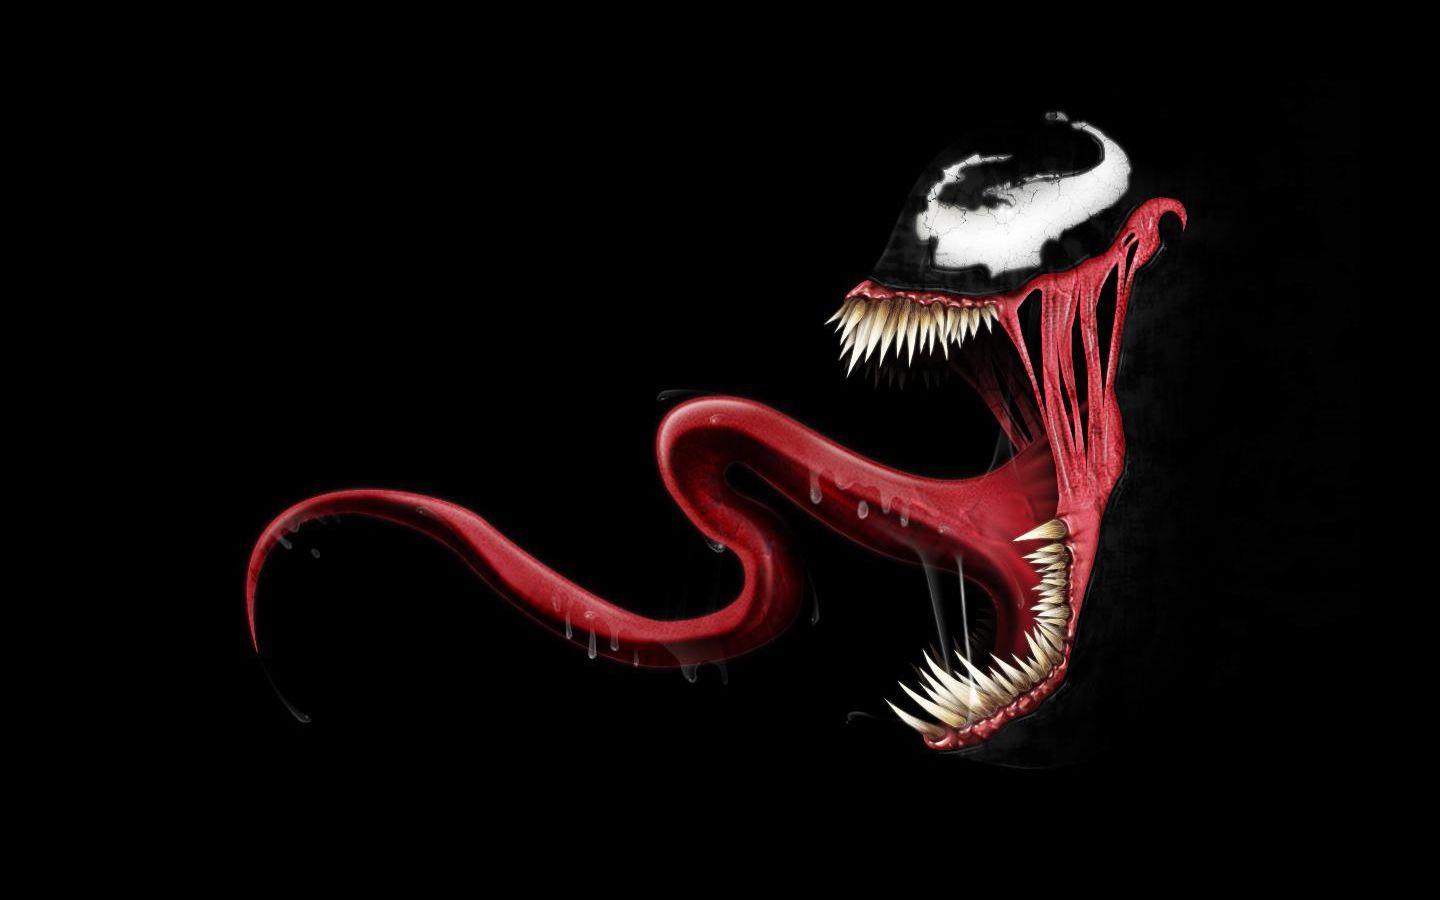 Black Venom HD Wallpaper. Venom, Venom movie, Marvel venom